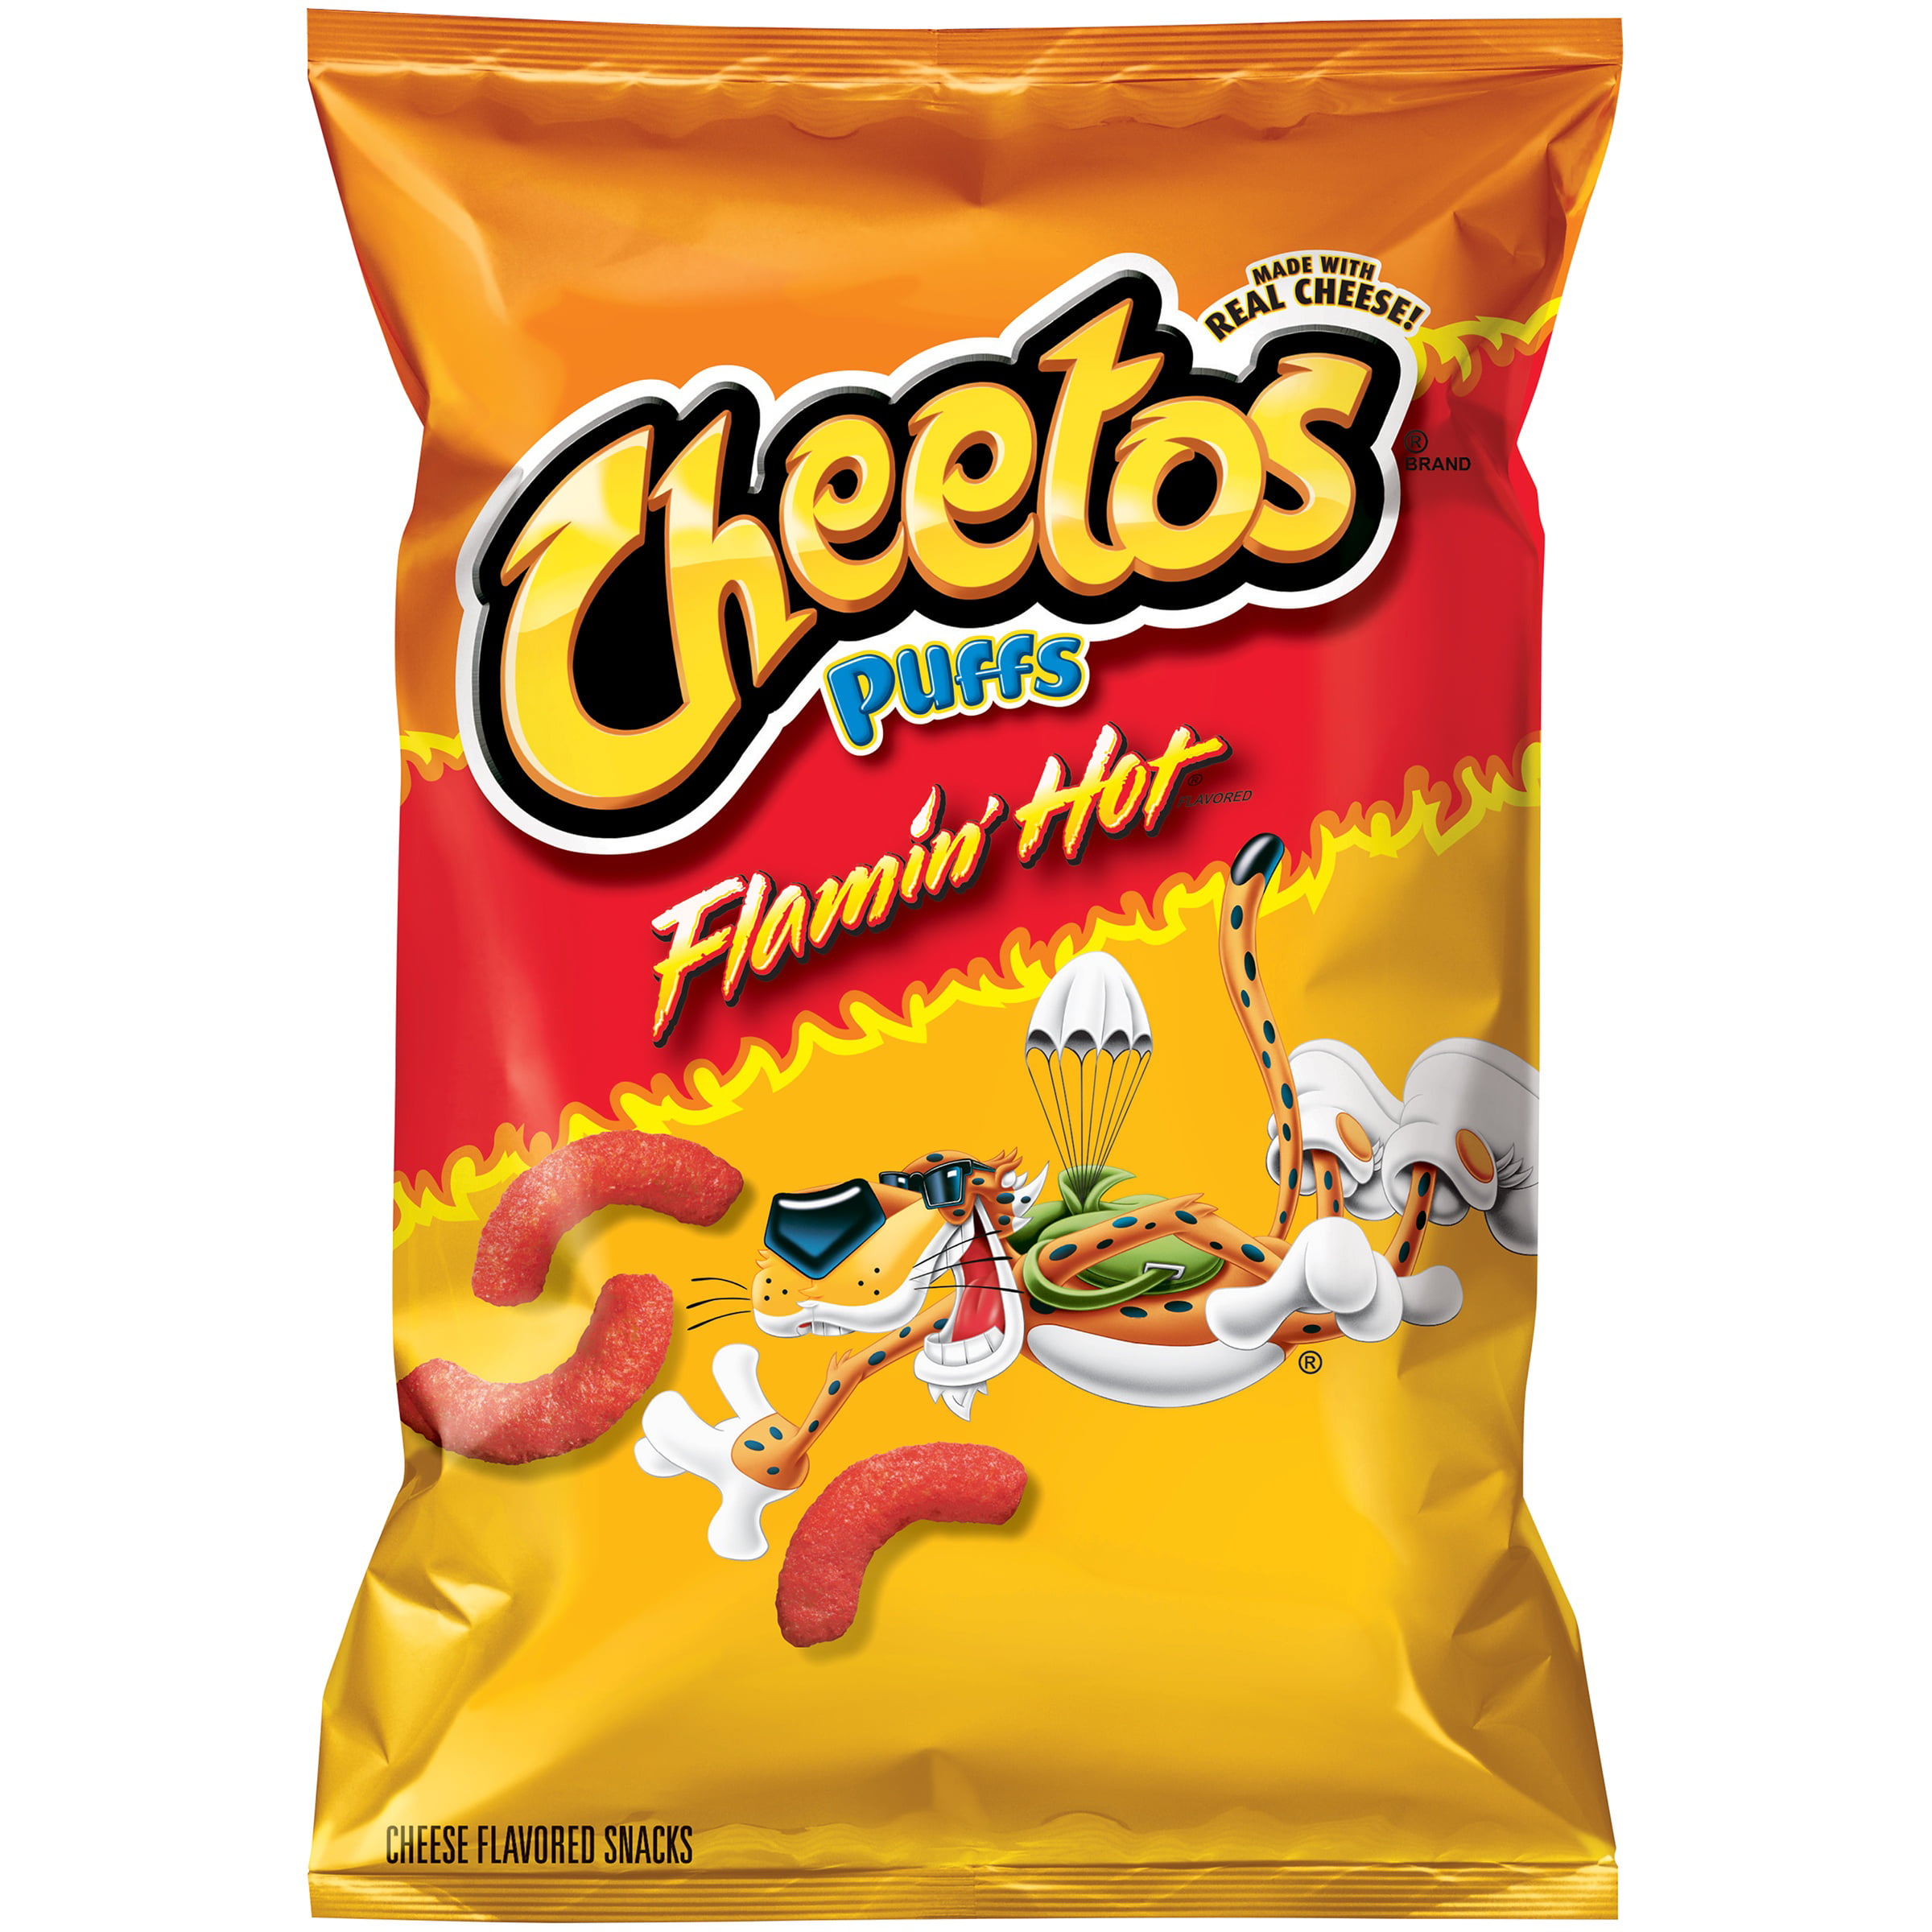 Cheetos Puffs Flamin' Hot Cheese Flavored Snacks 3 oz. Bag - Walmart